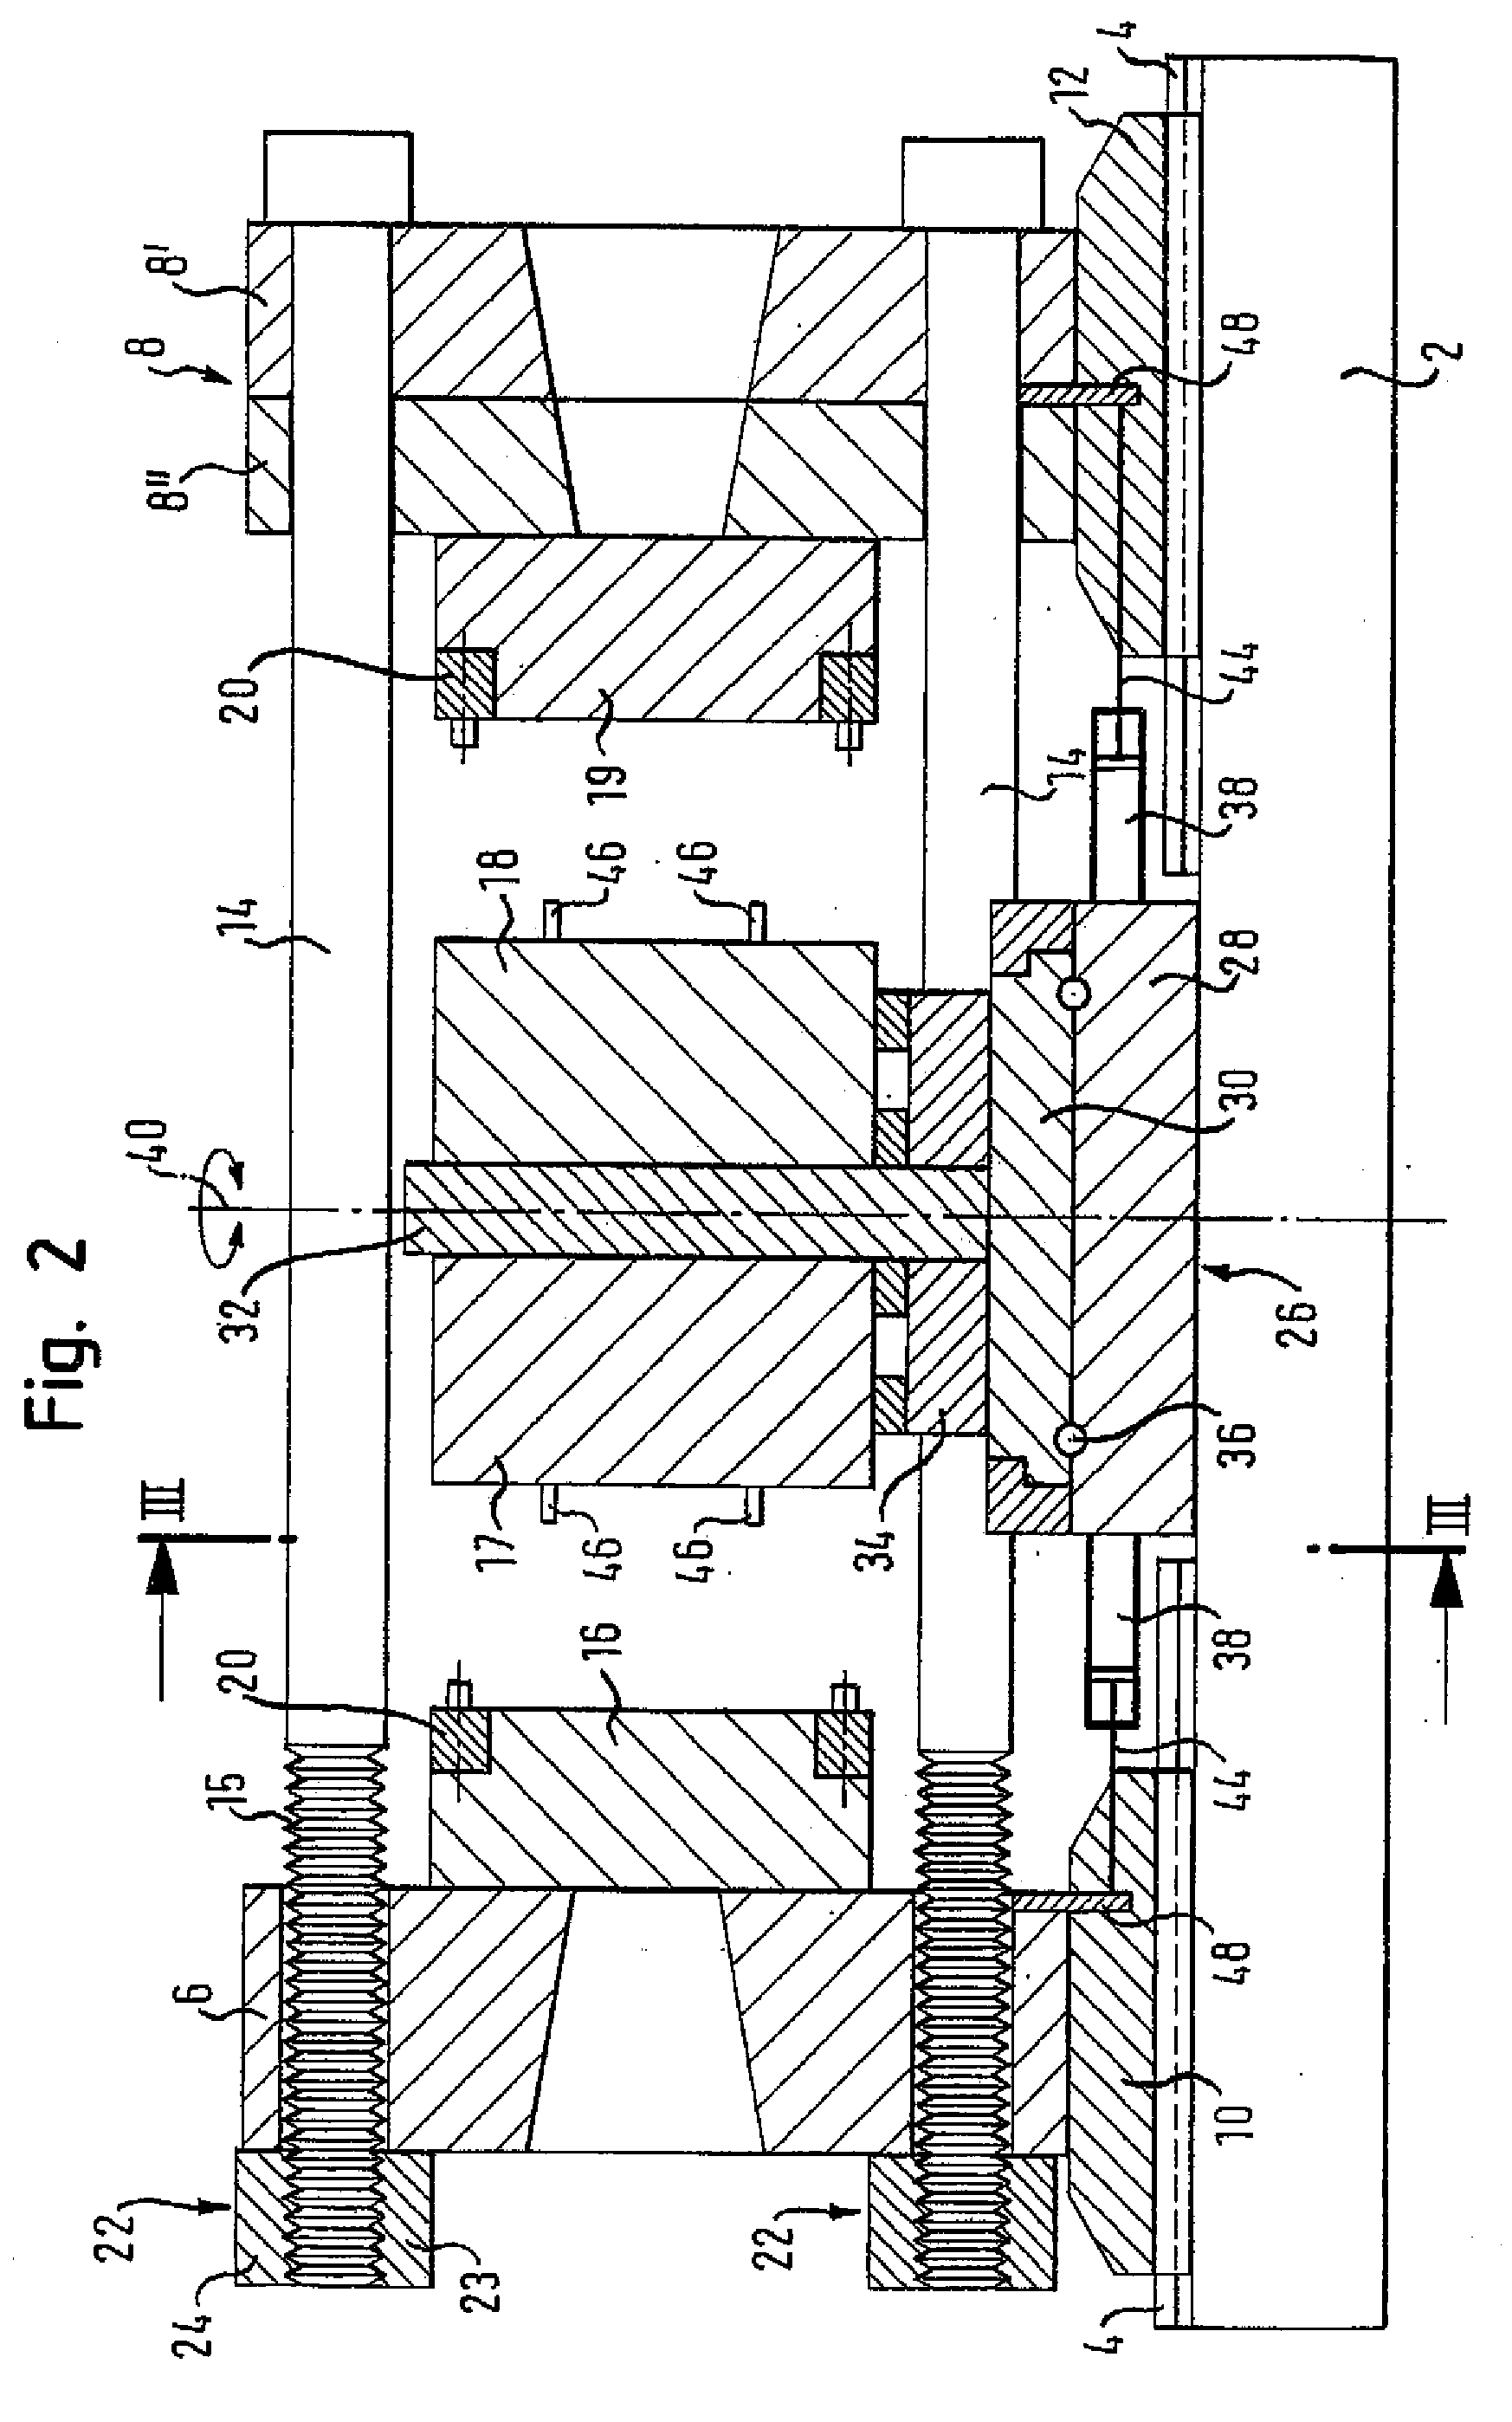 Horizontal injection molding machine with turning device